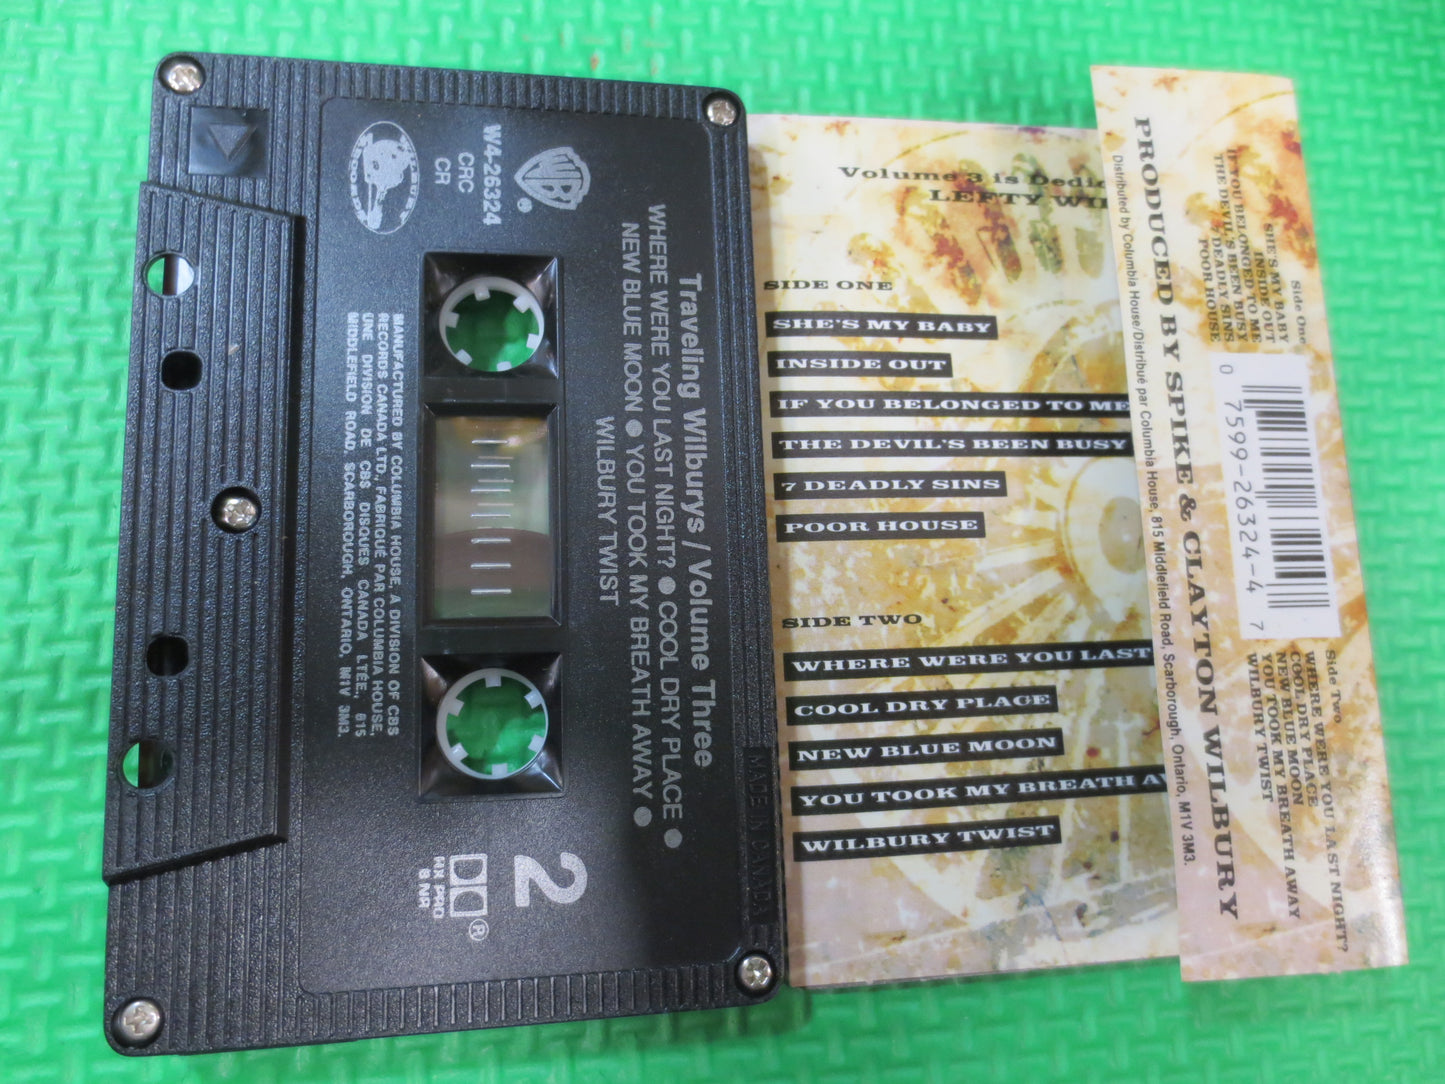 TRAVELING WILBURYS, Volume 3 Tape, Rock Album, Rock Music, Rock Song, Tape Cassette, Rock Cassette, Rock Lp, 1990 Cassette